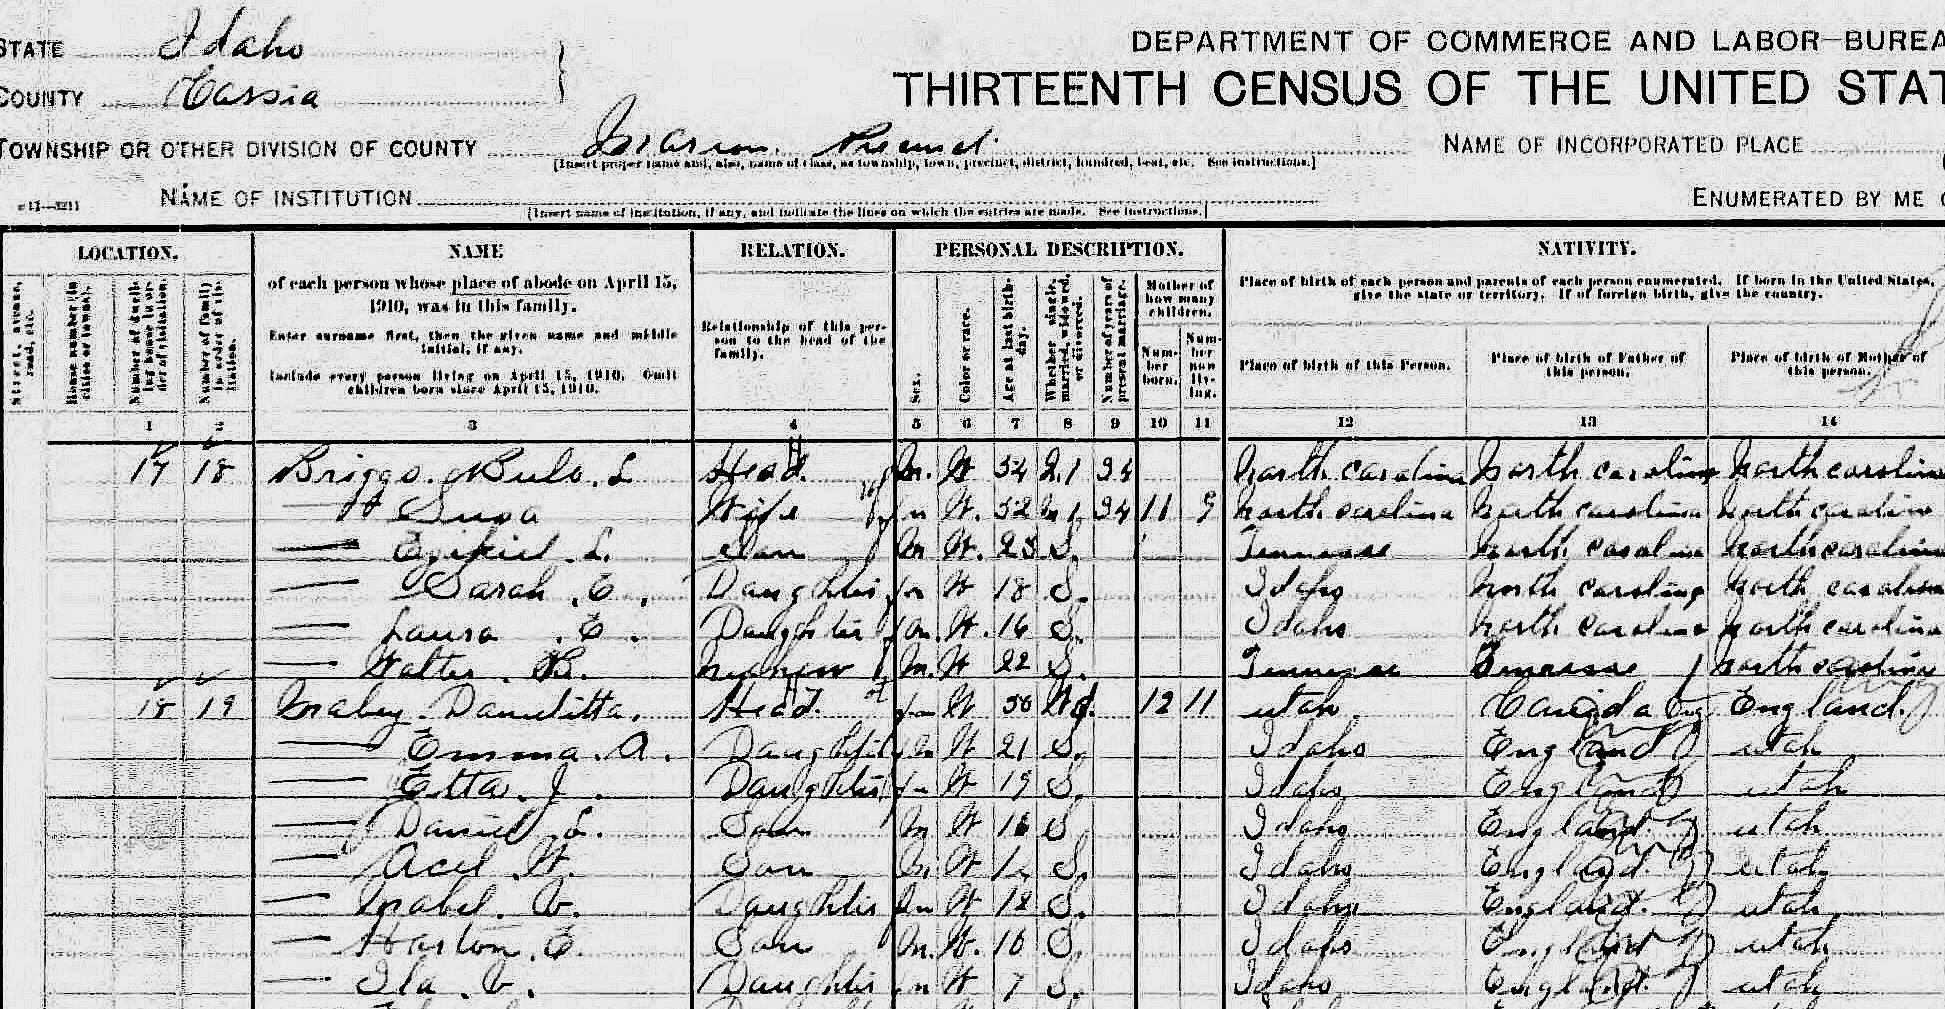 1910 U.S. Census Record-Alvaretta Jane Tolman and Henry Albert Belcher